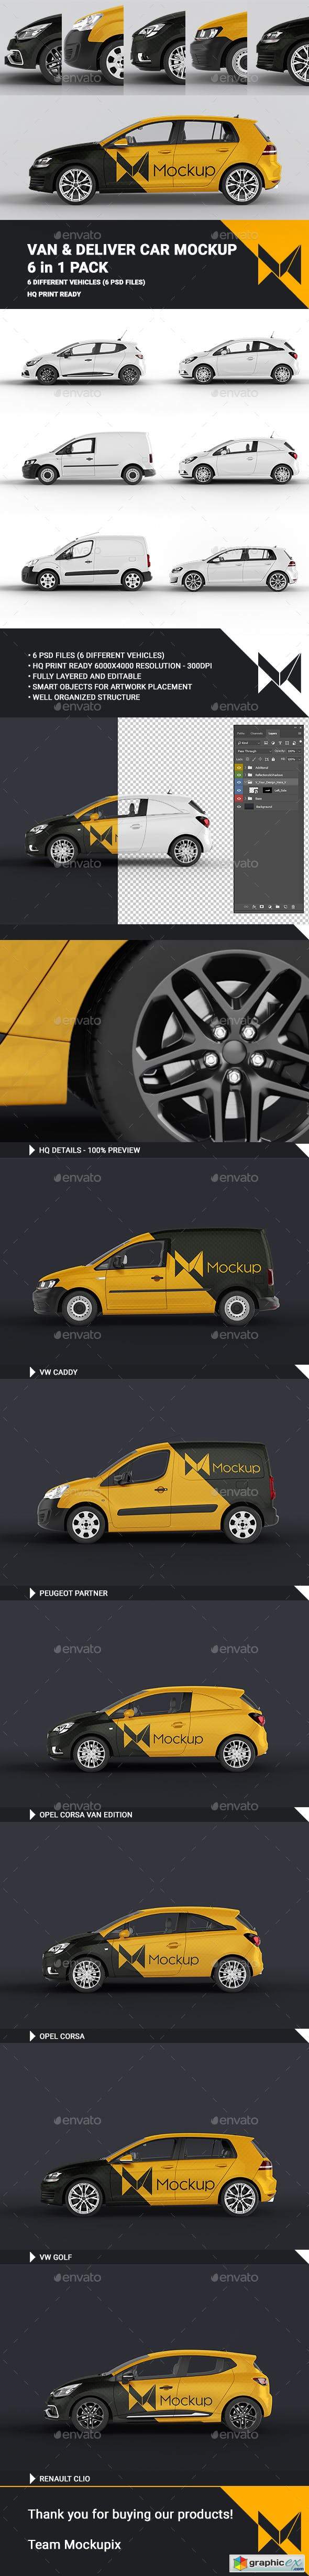 Van & Delivery Cars Mockup 6 in 1 Pack